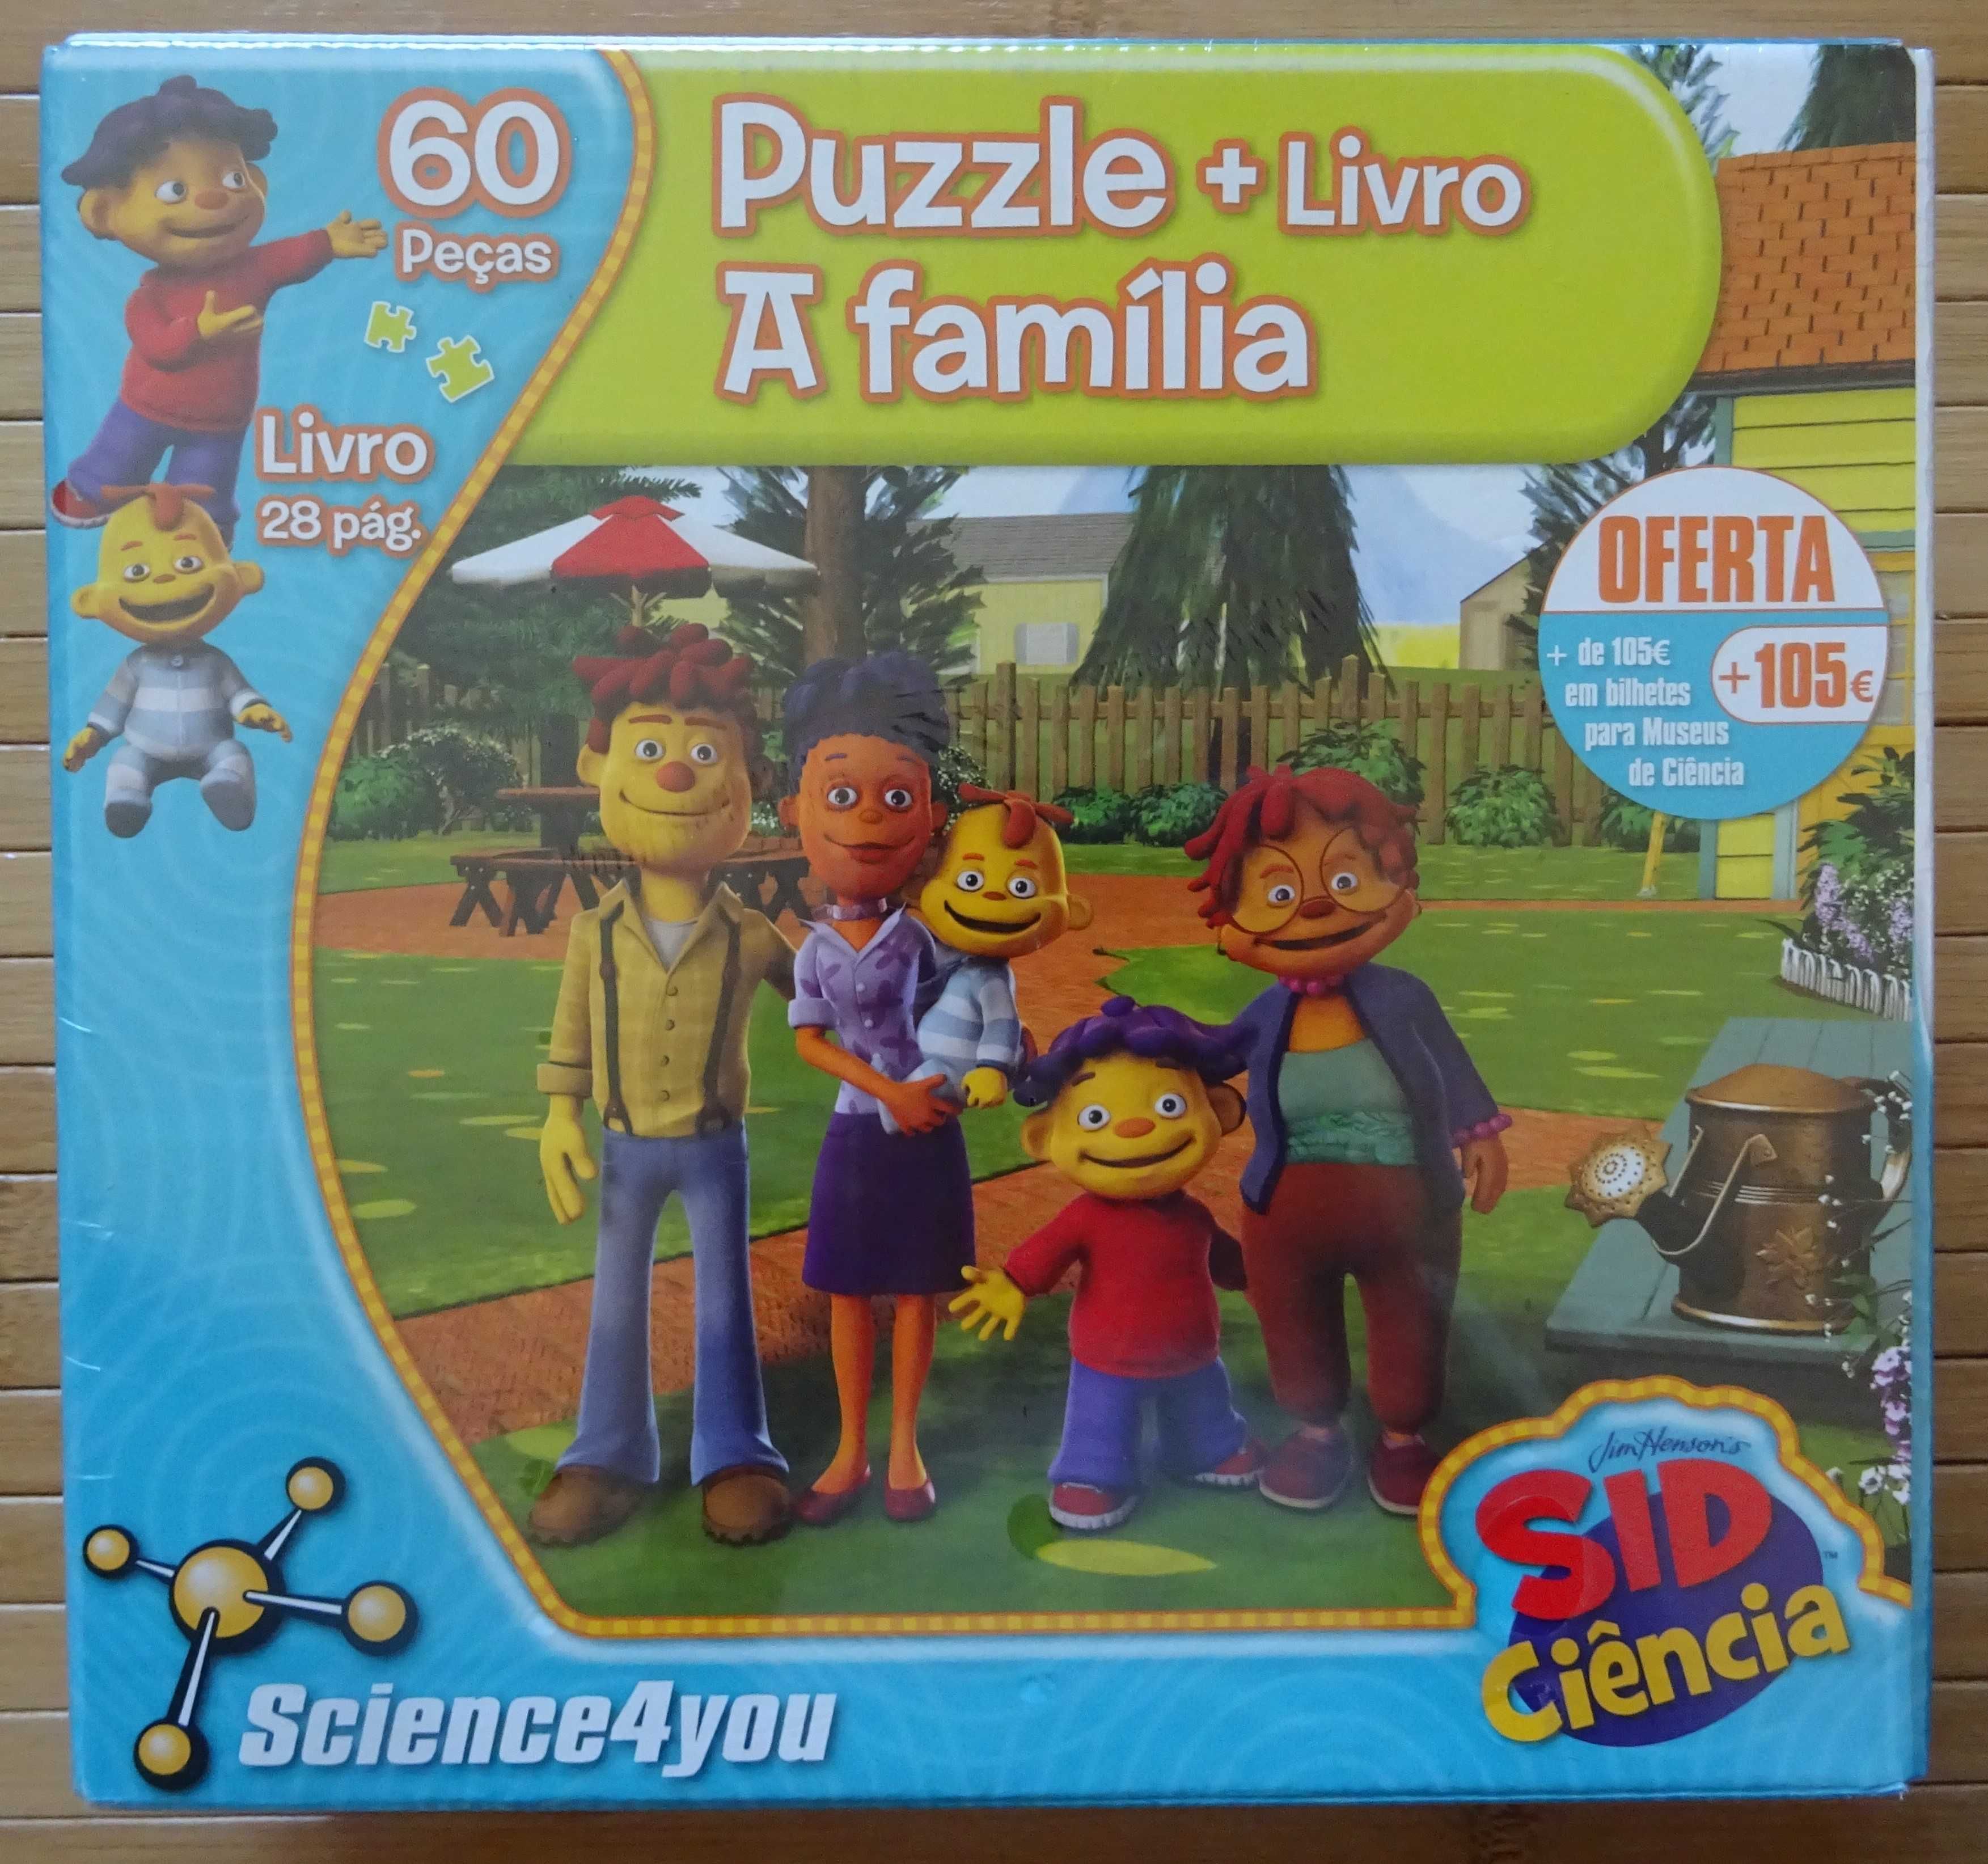 Puzzle + Livro A Família - SID Ciência - Science4you